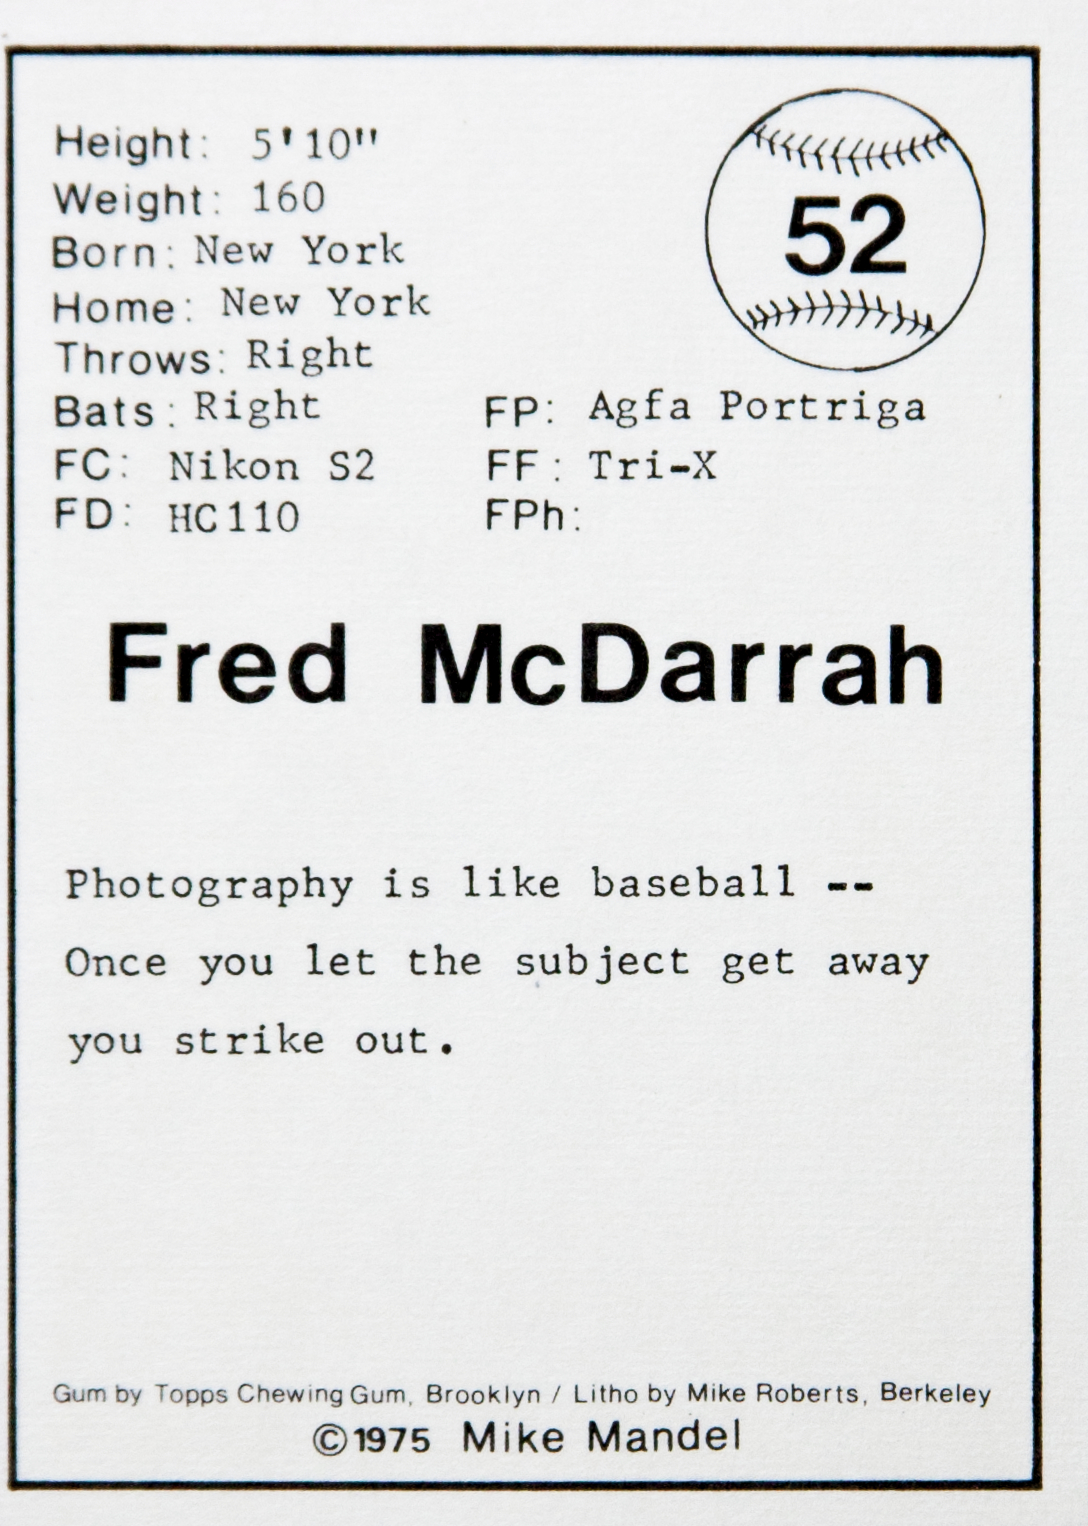 Fred McDarrah